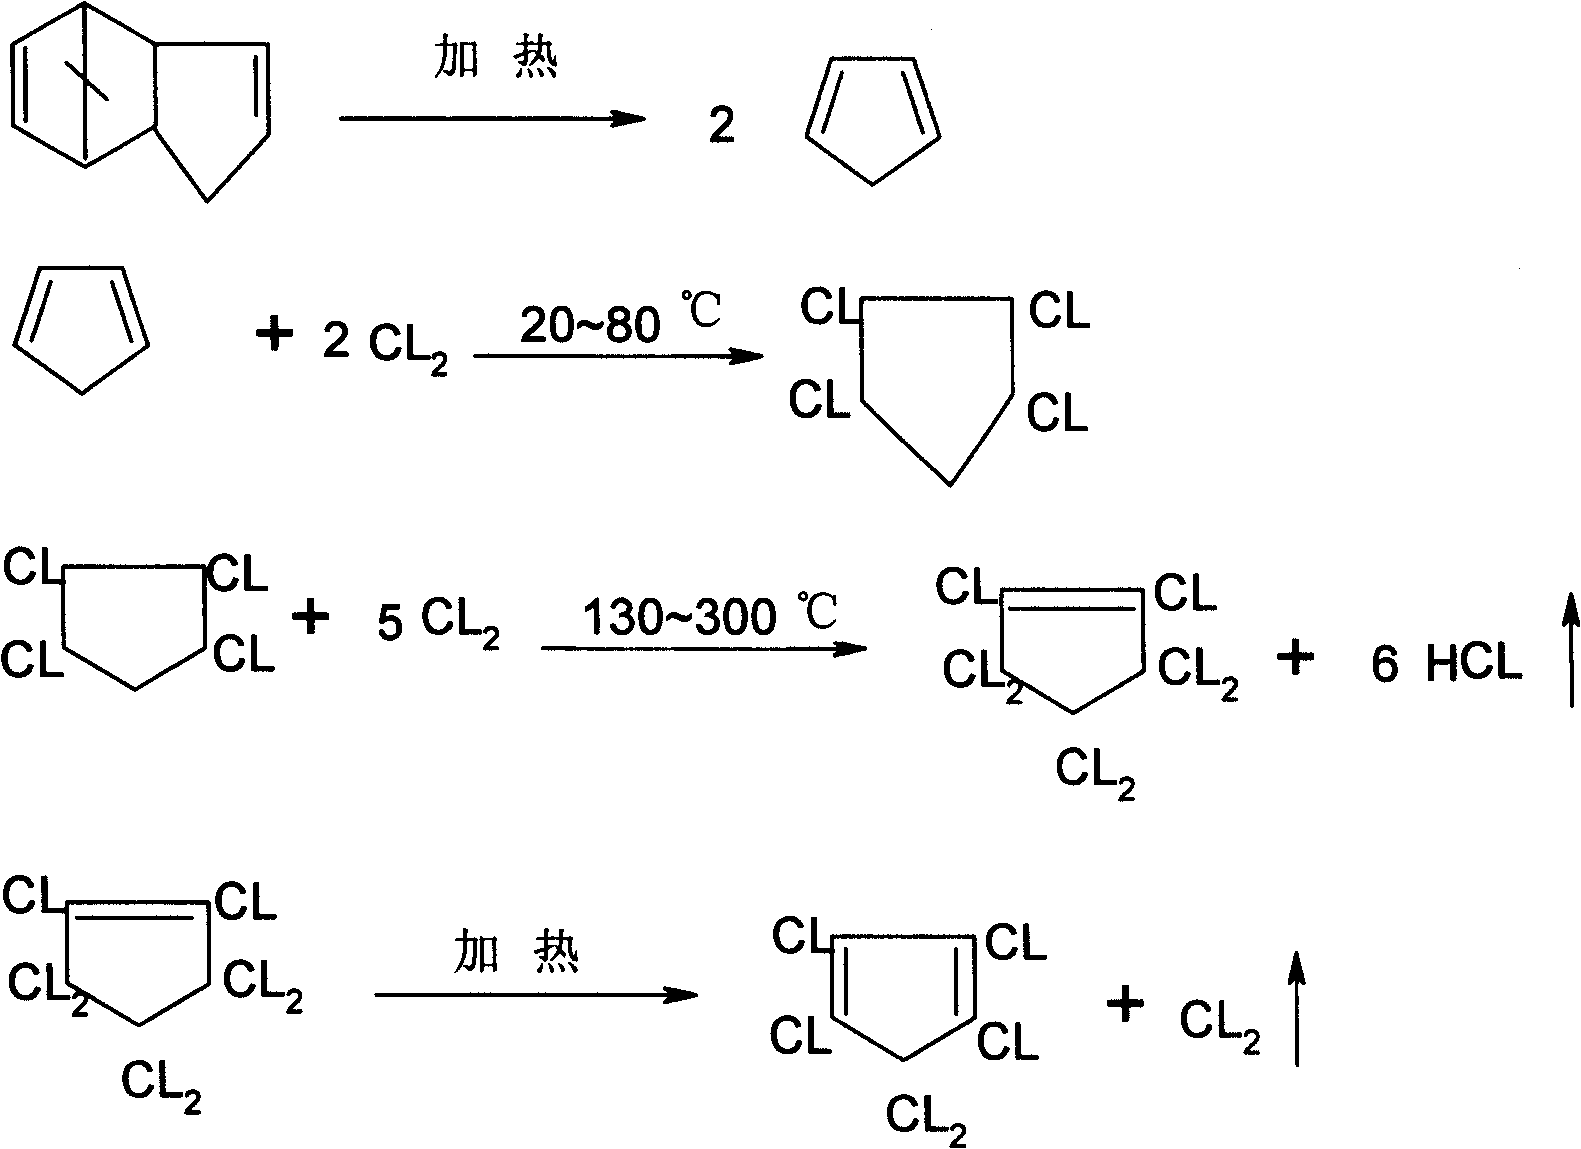 Method for preparing perchlorinated cyclopentadienyl